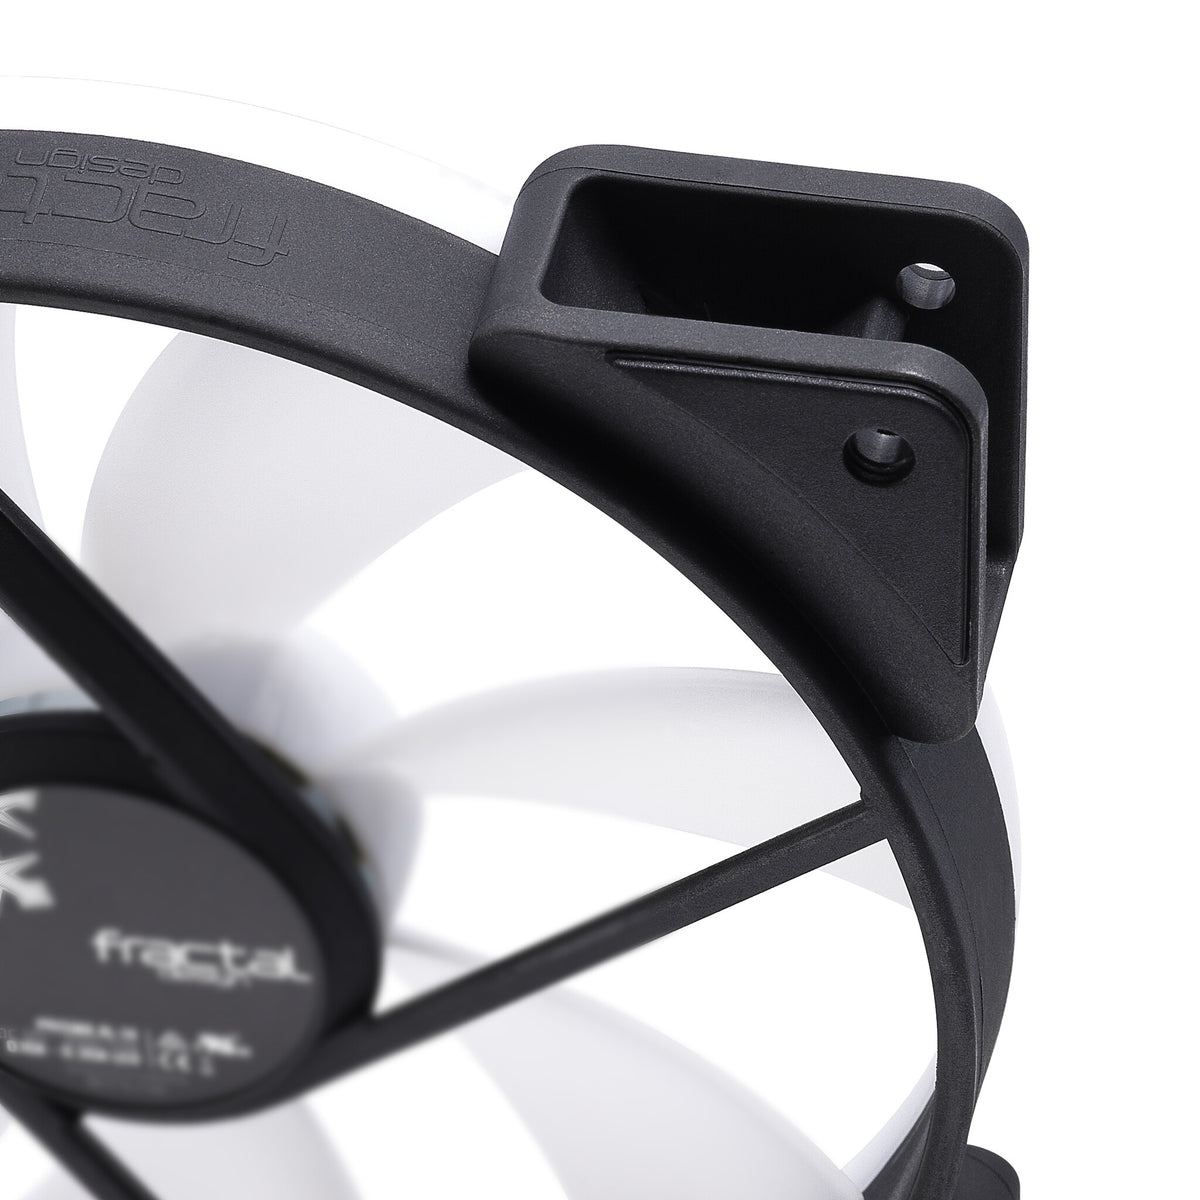 Fractal Design Prisma AL-14 - Computer Case Fan in Black / White - 140mm